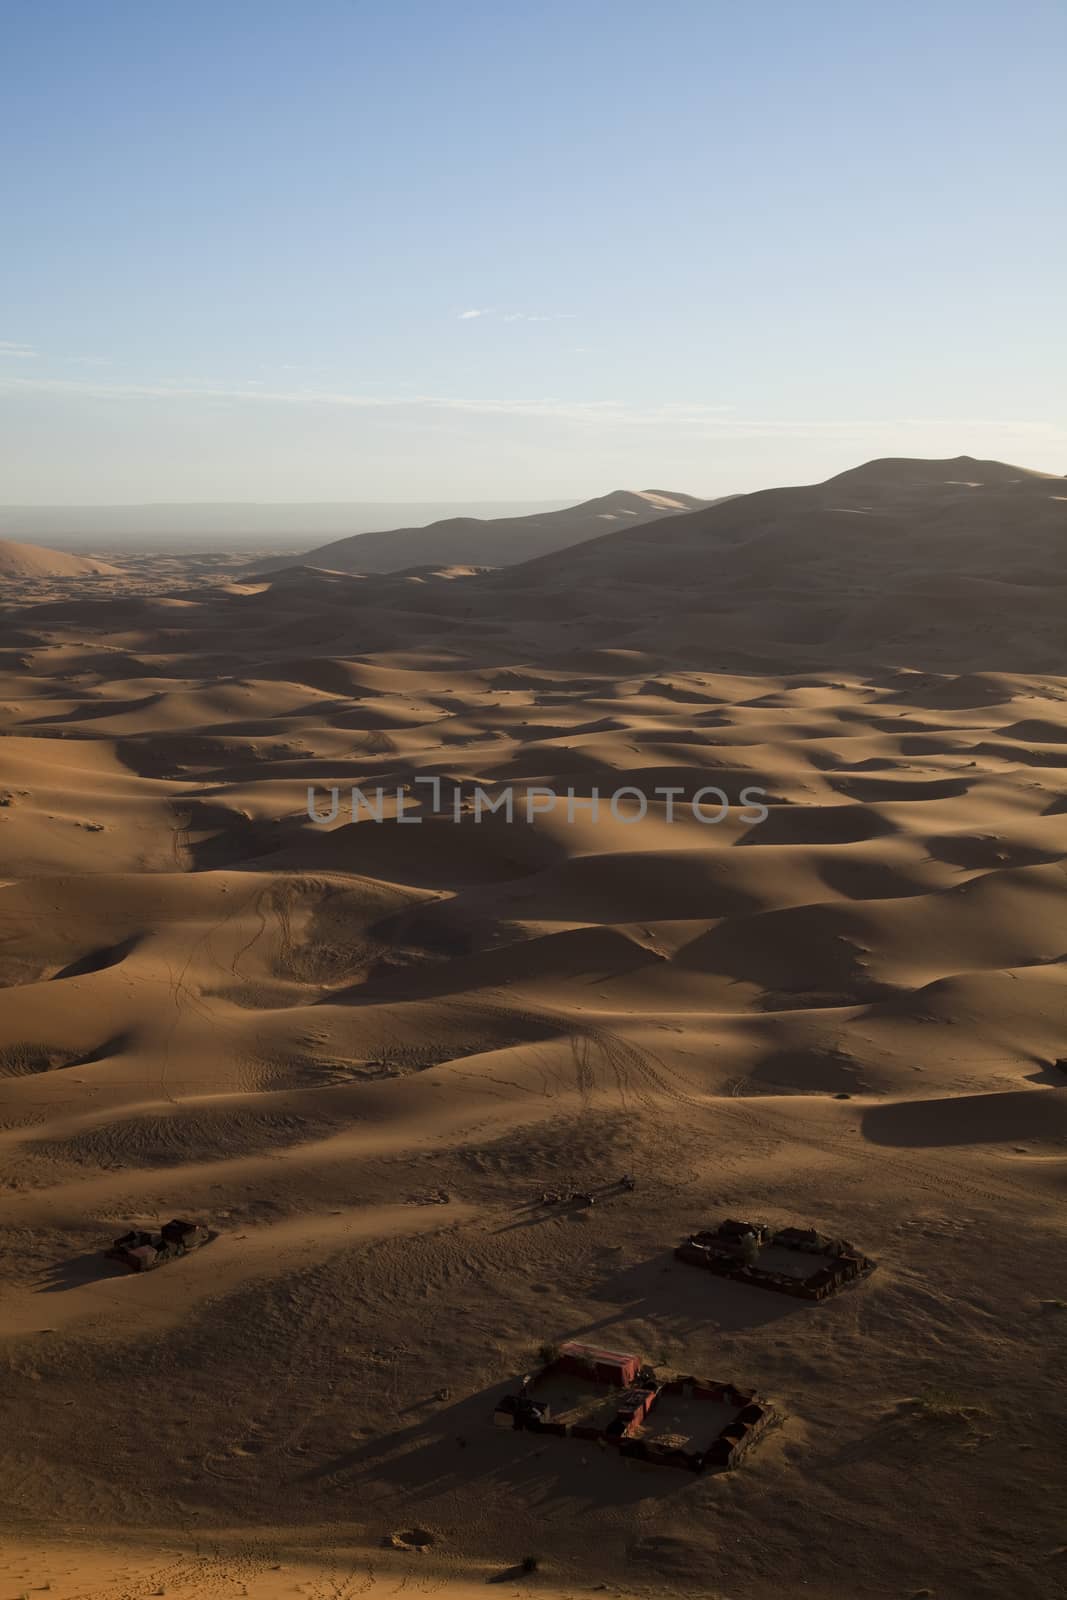 Desert dunes in Morocco, colorful vibrant travel theme